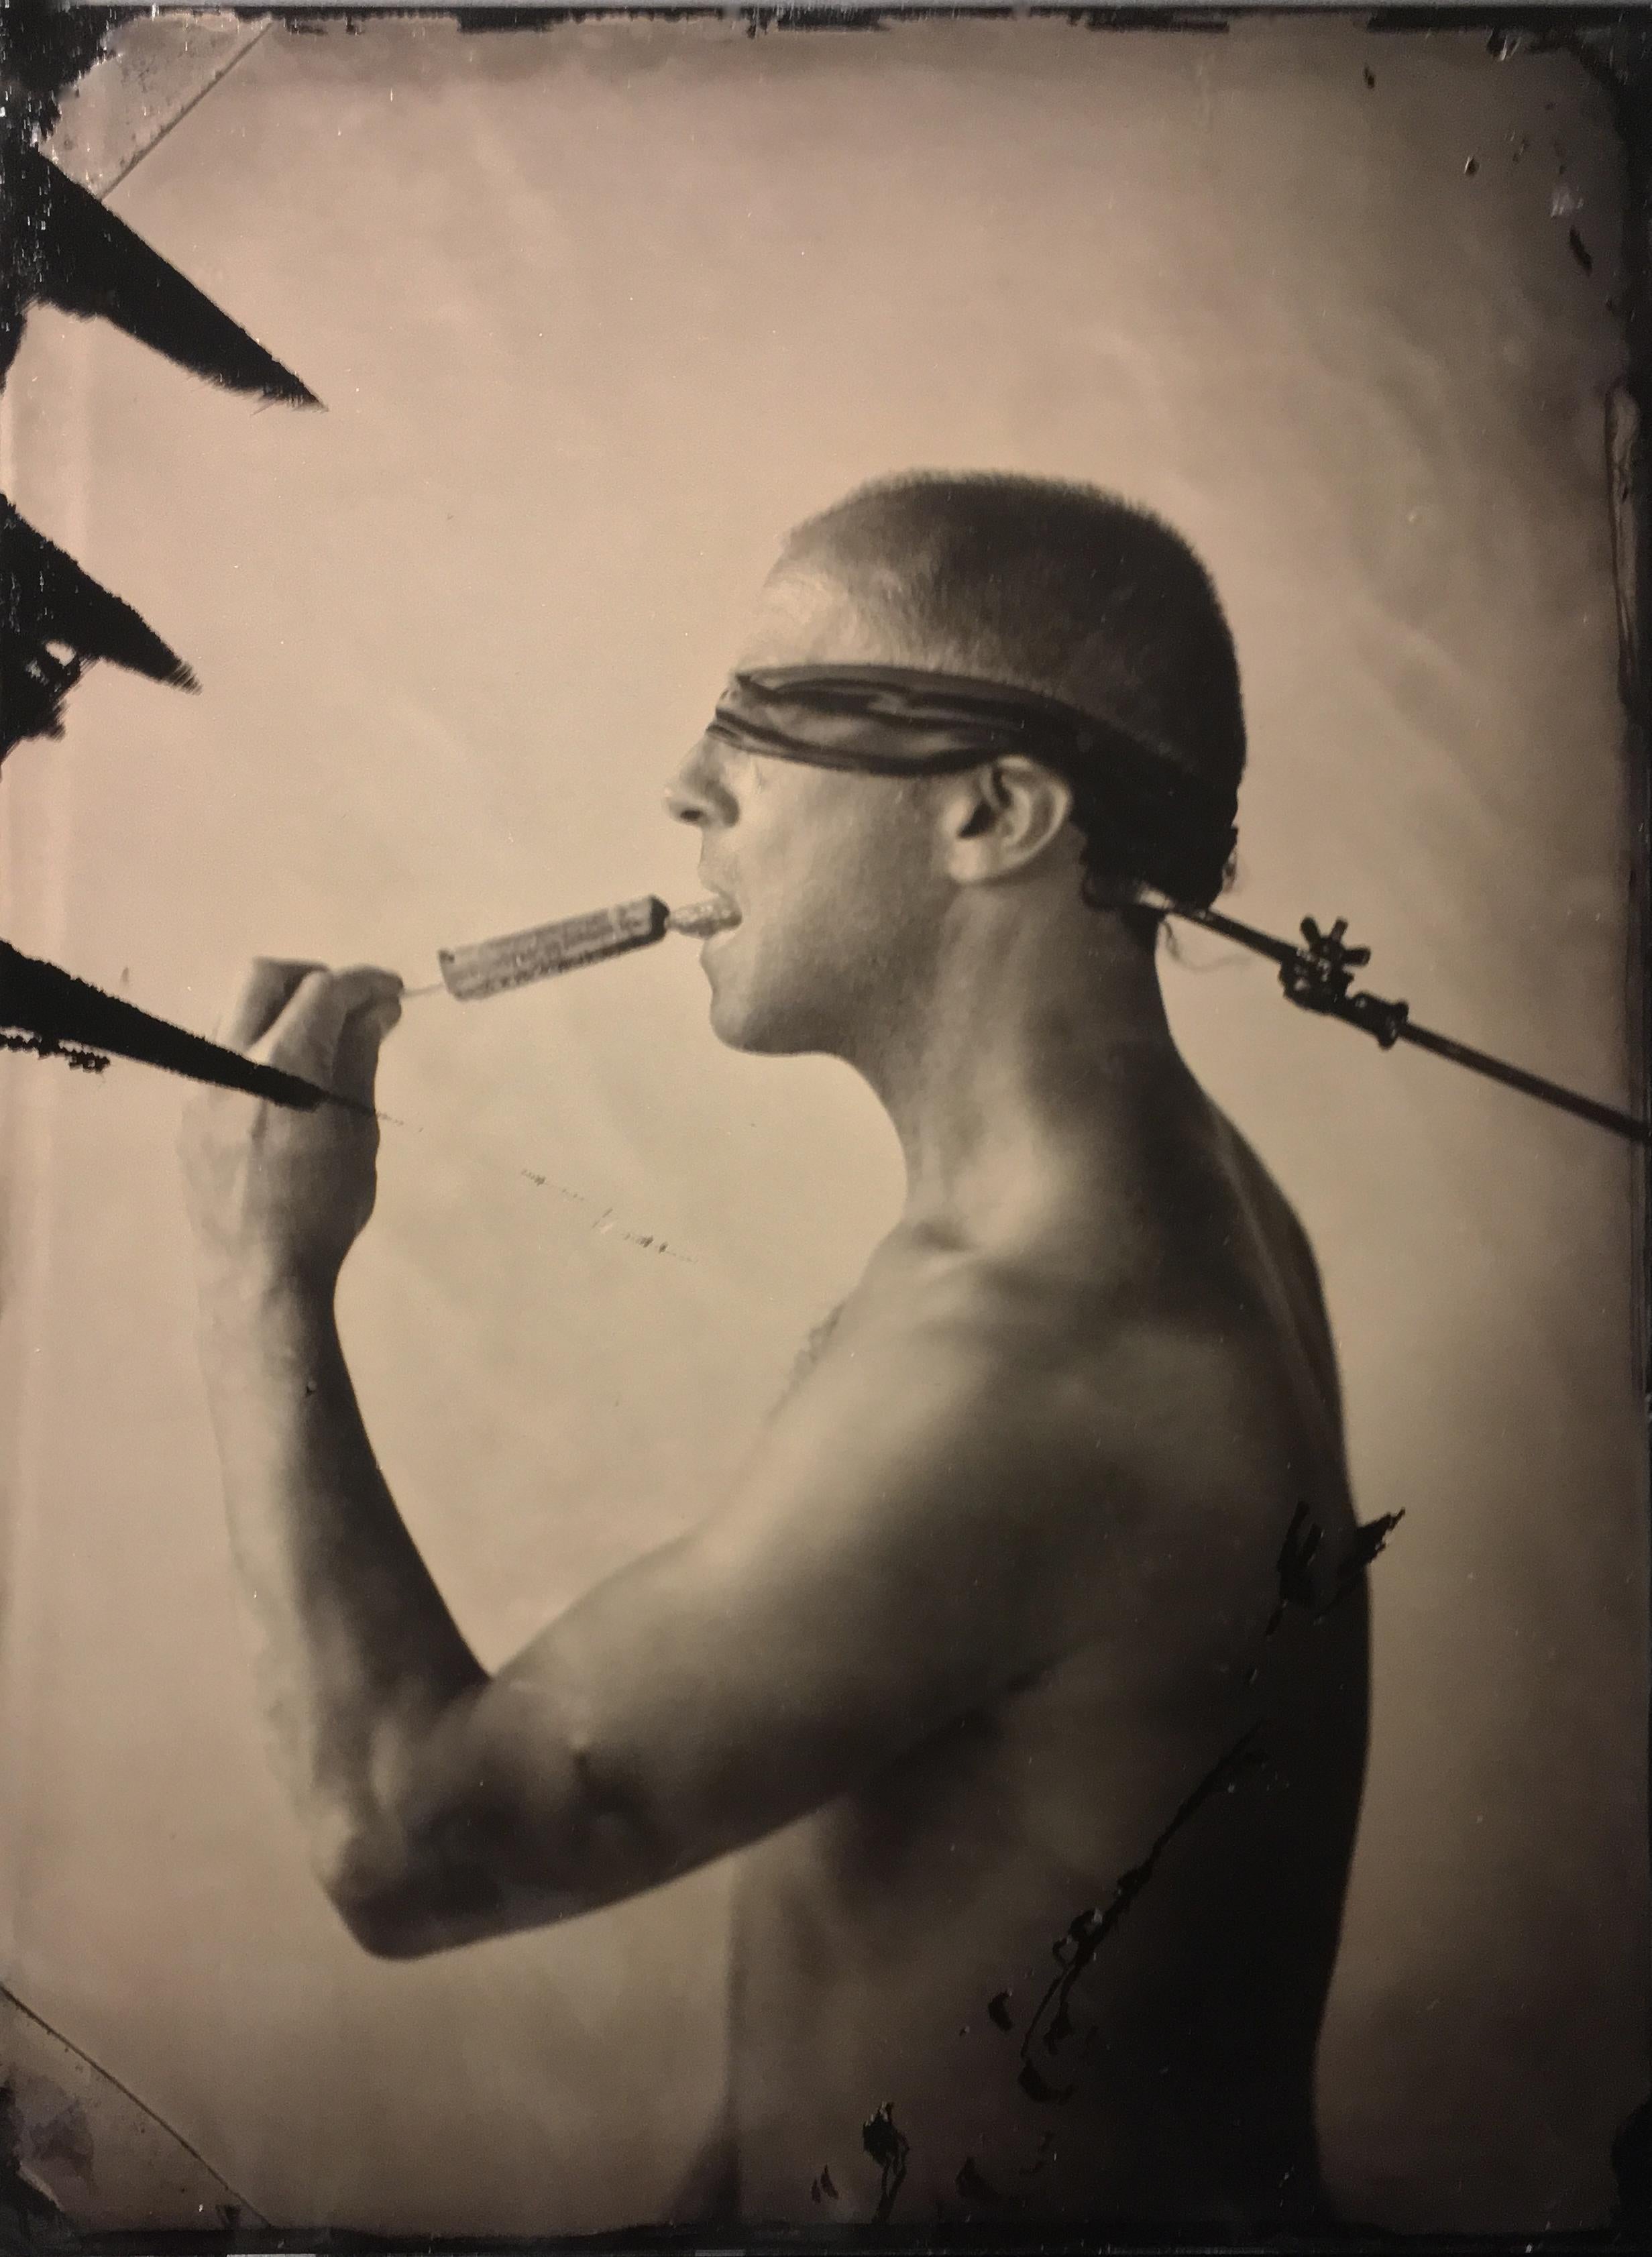 David Sokosh Figurative Photograph - Linguist (Salacious Tin Type Photo of Male Nude Licking an Ice Pop, blindfolded)